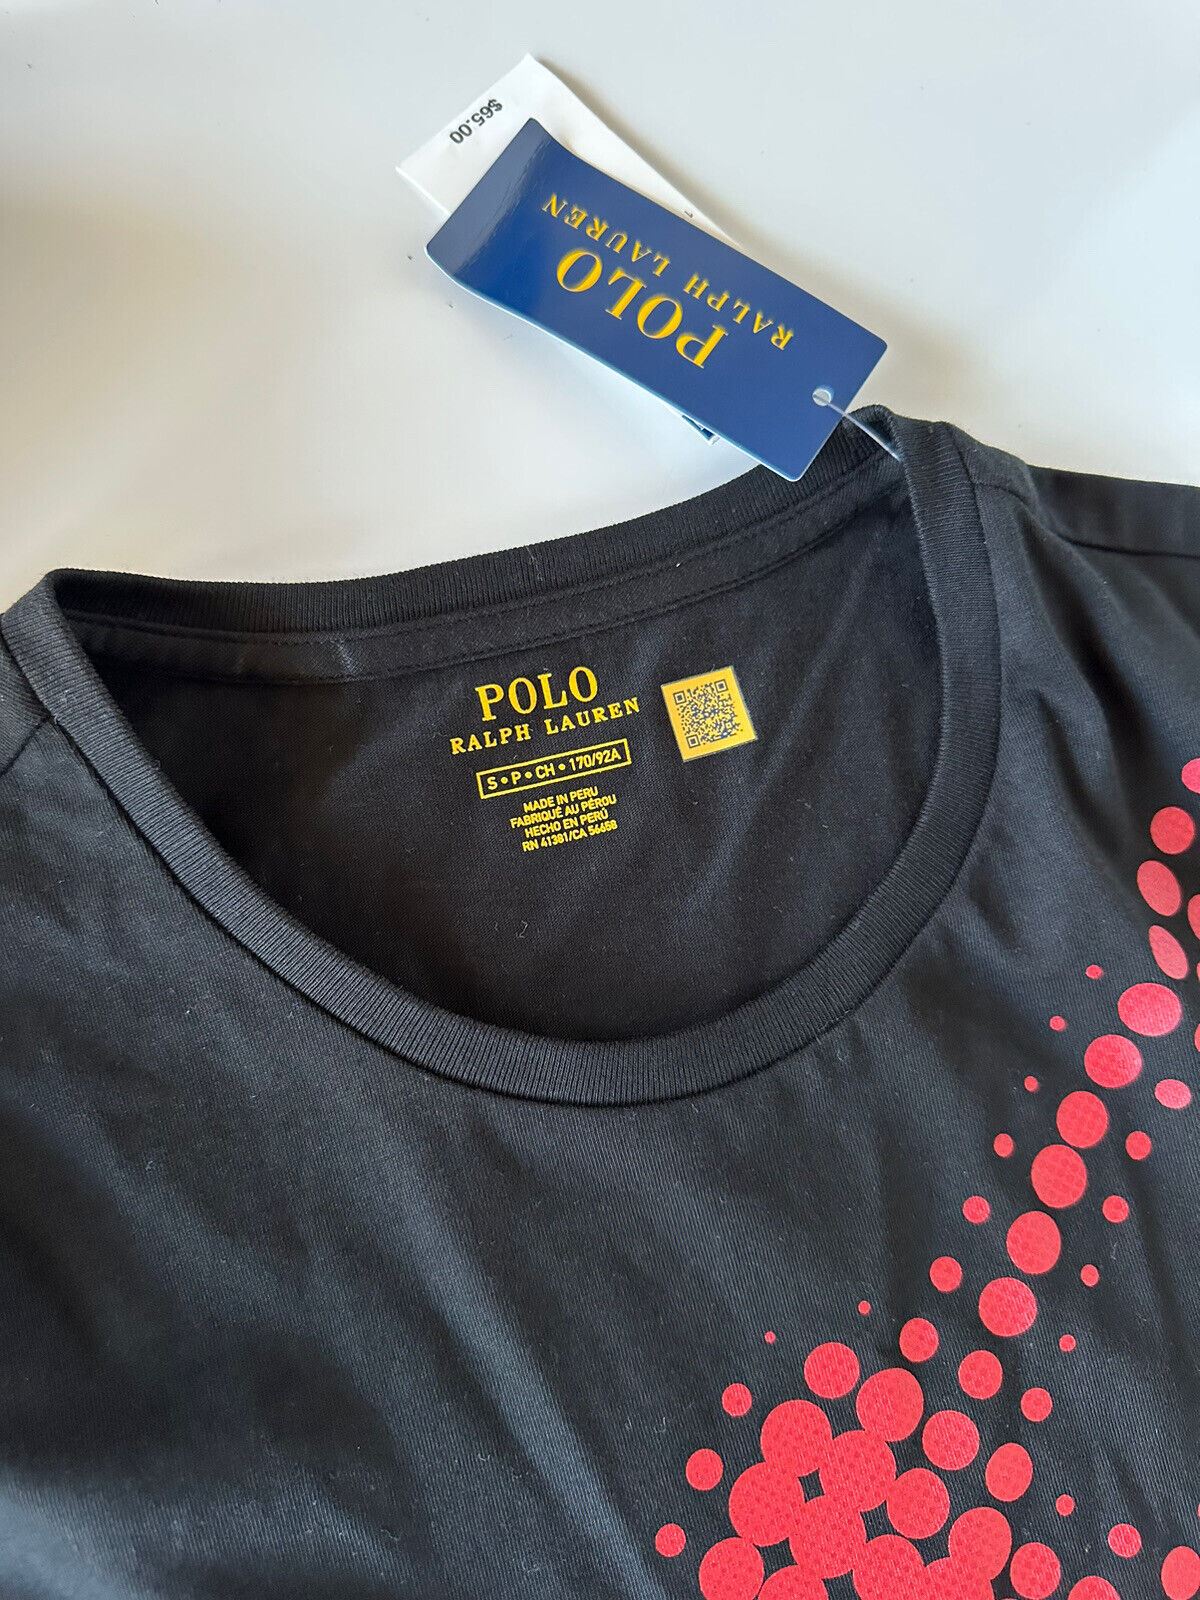 NWT $65 Polo Ralph Lauren Short Sleeve Logo T-shirt Black S